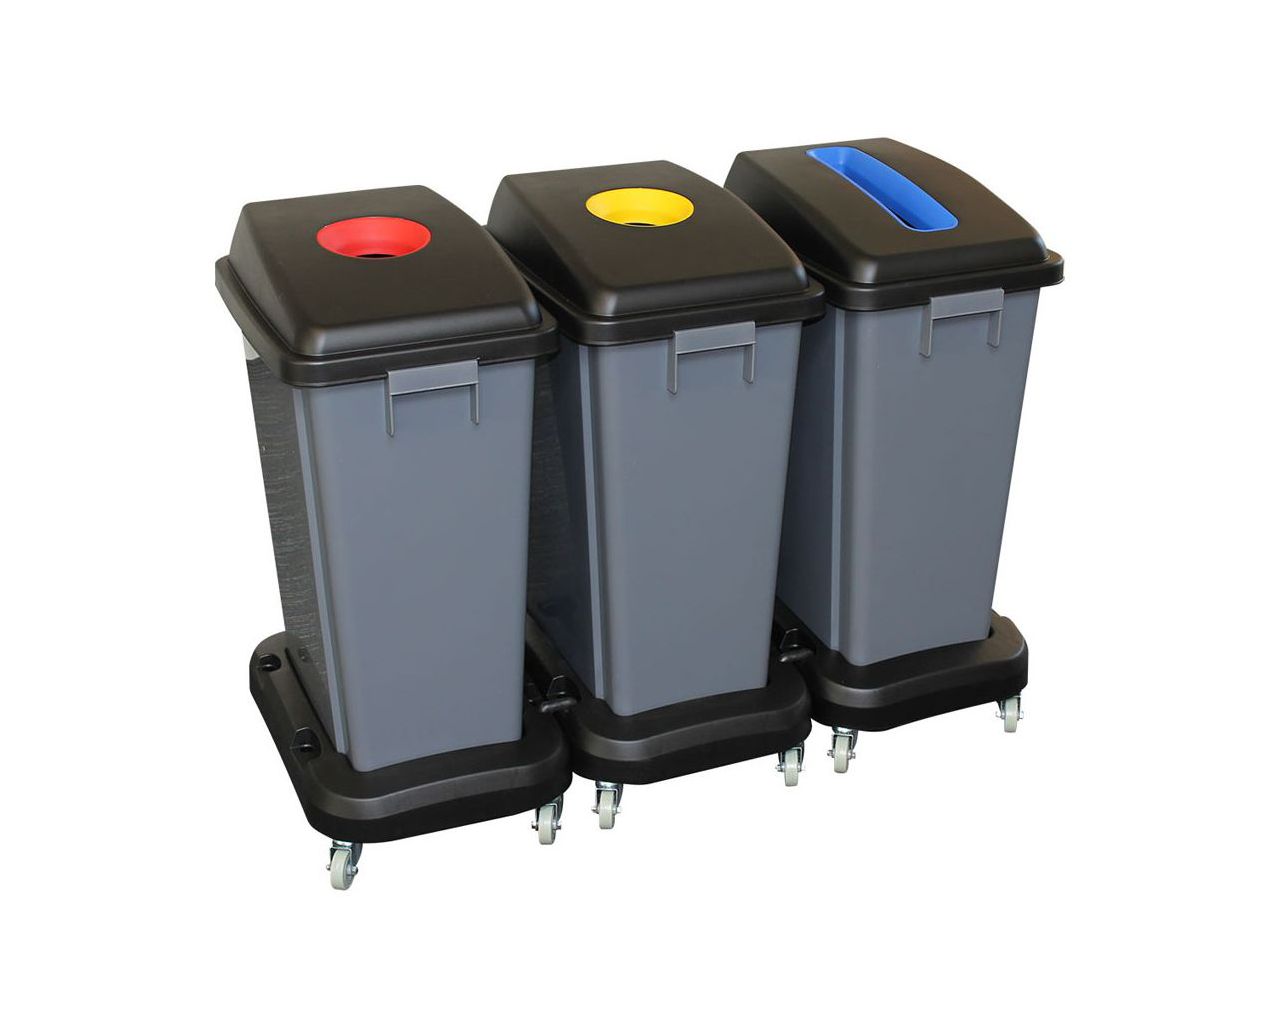 Triple recycling set, 3 x 60l plastic bin on maneuverable plastic base with wheels (grey)